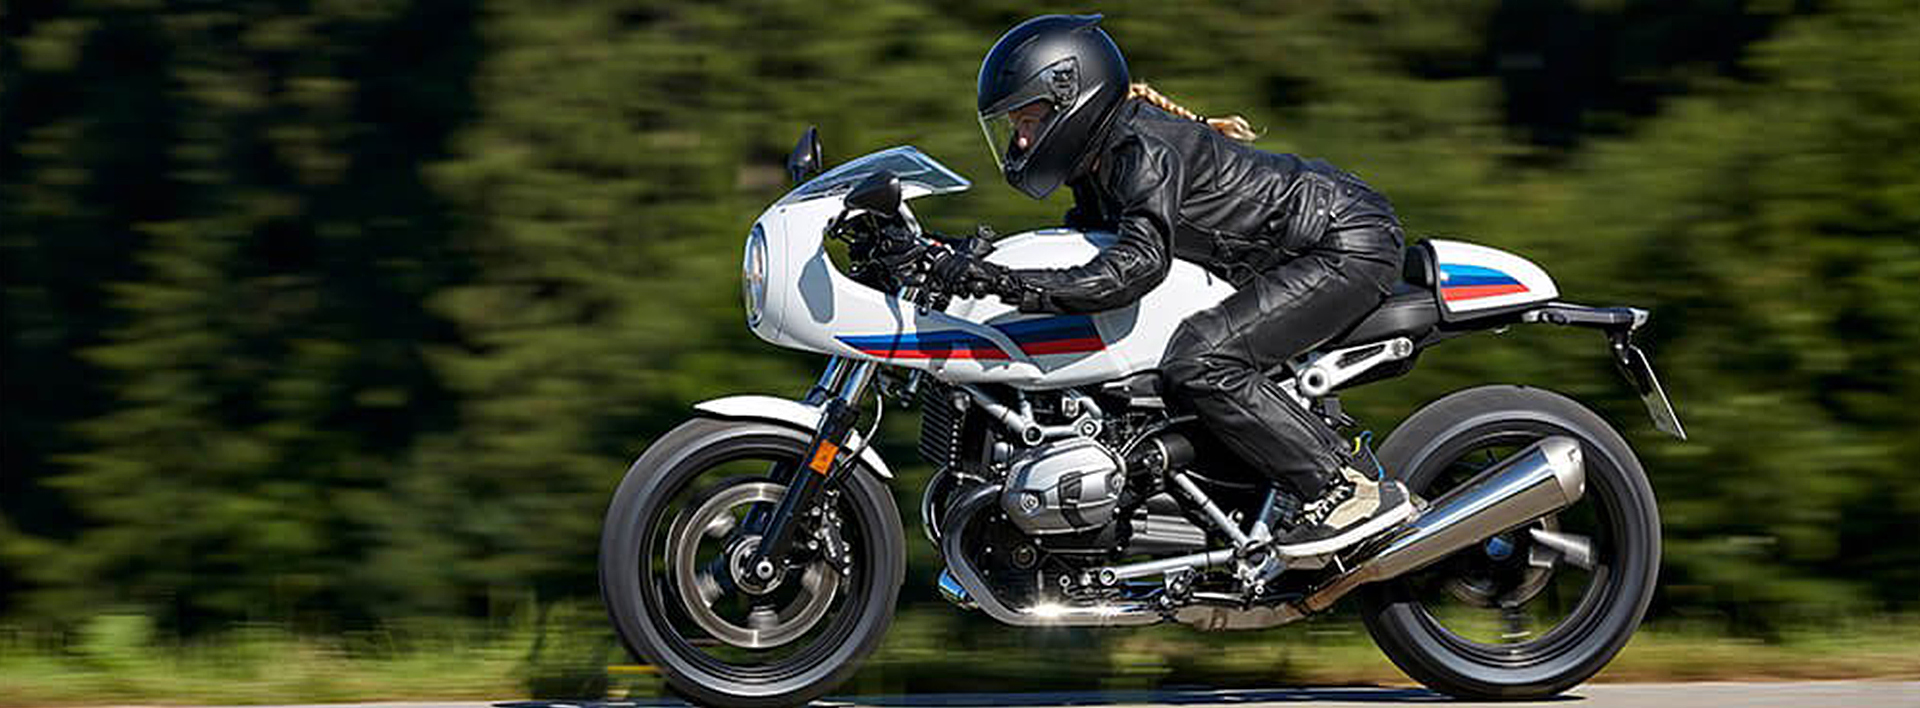 BMW Motorrad Dealer Melbourne | Melbourne BMW Motorcycles | Autosports